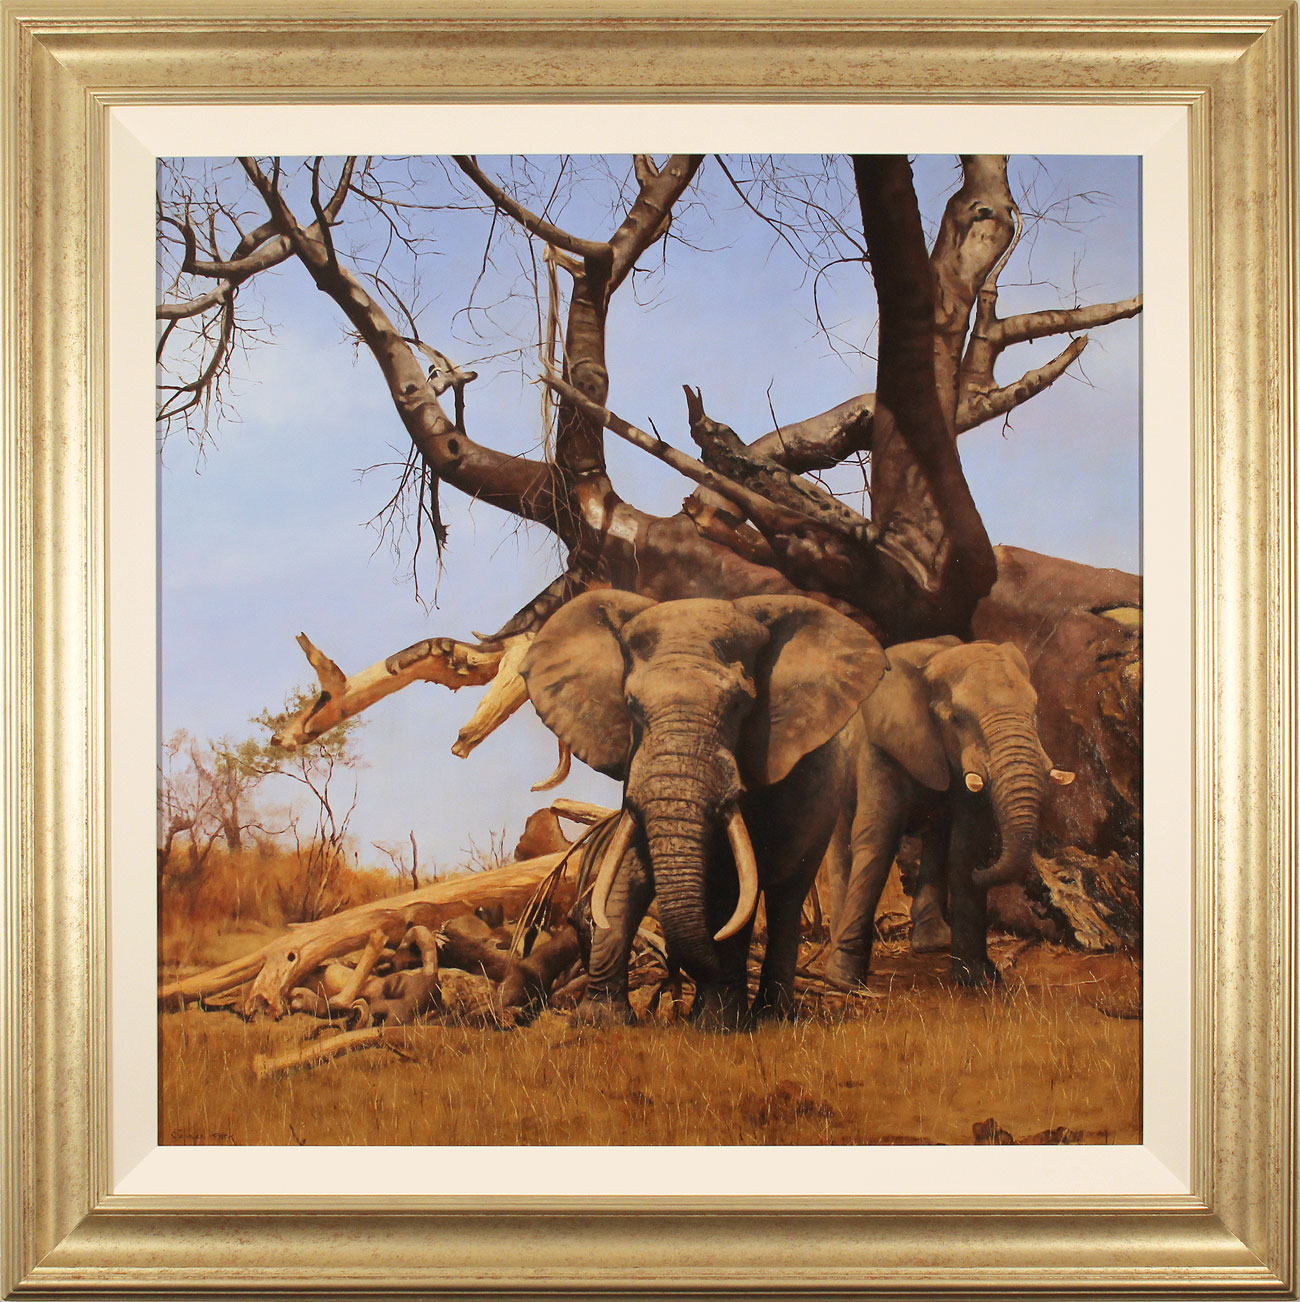 Stephen Park, Original oil painting on panel, African Elephants